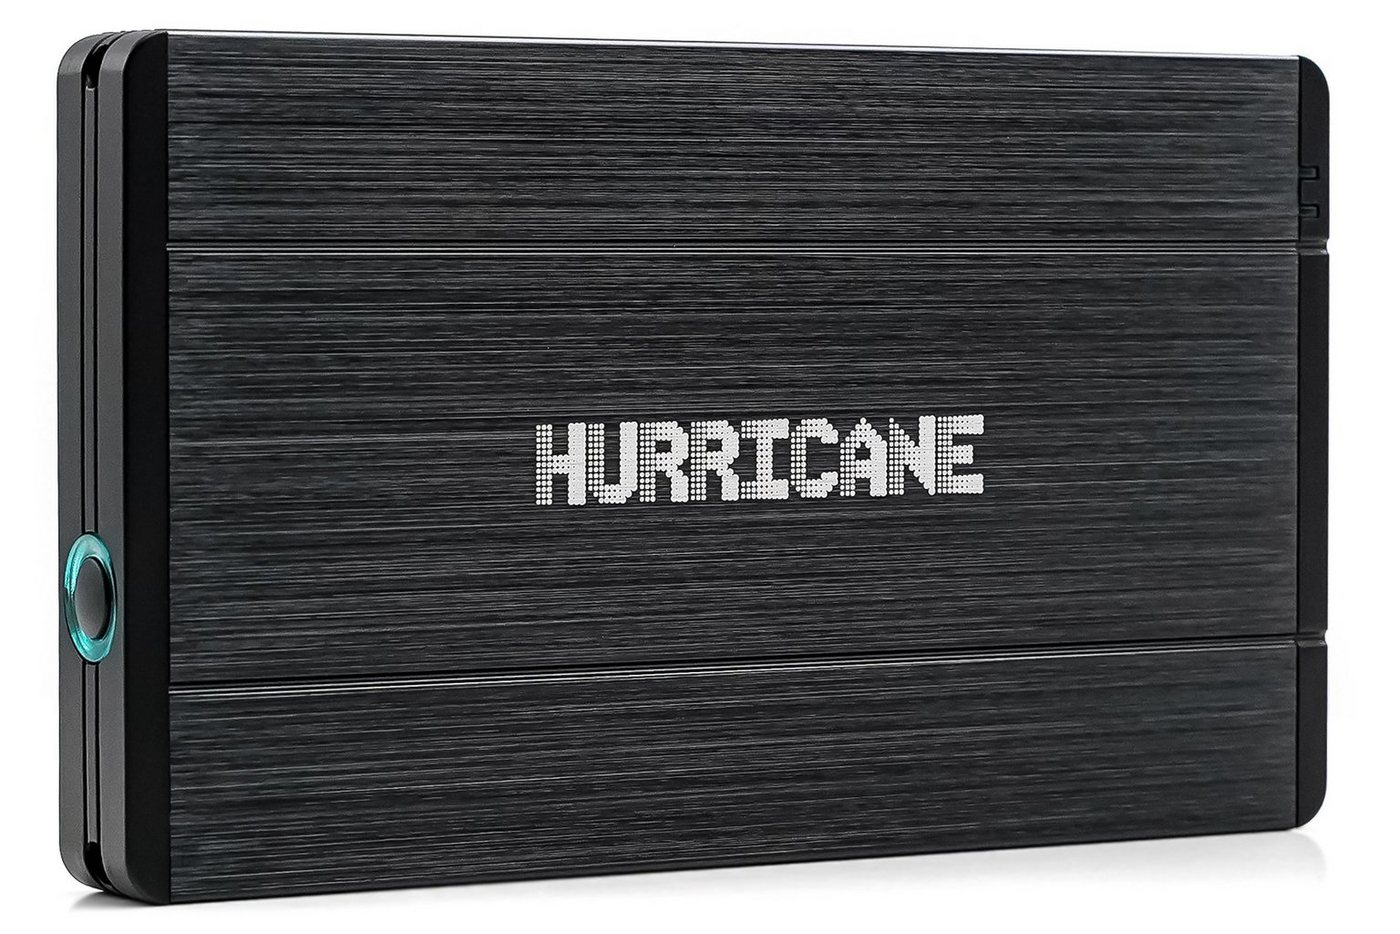 HURRICANE Hurricane 12.5mm GD25650 160GB 2.5 USB 3.0 Externe Aluminium Festpla externe HDD-Festplatte" von HURRICANE